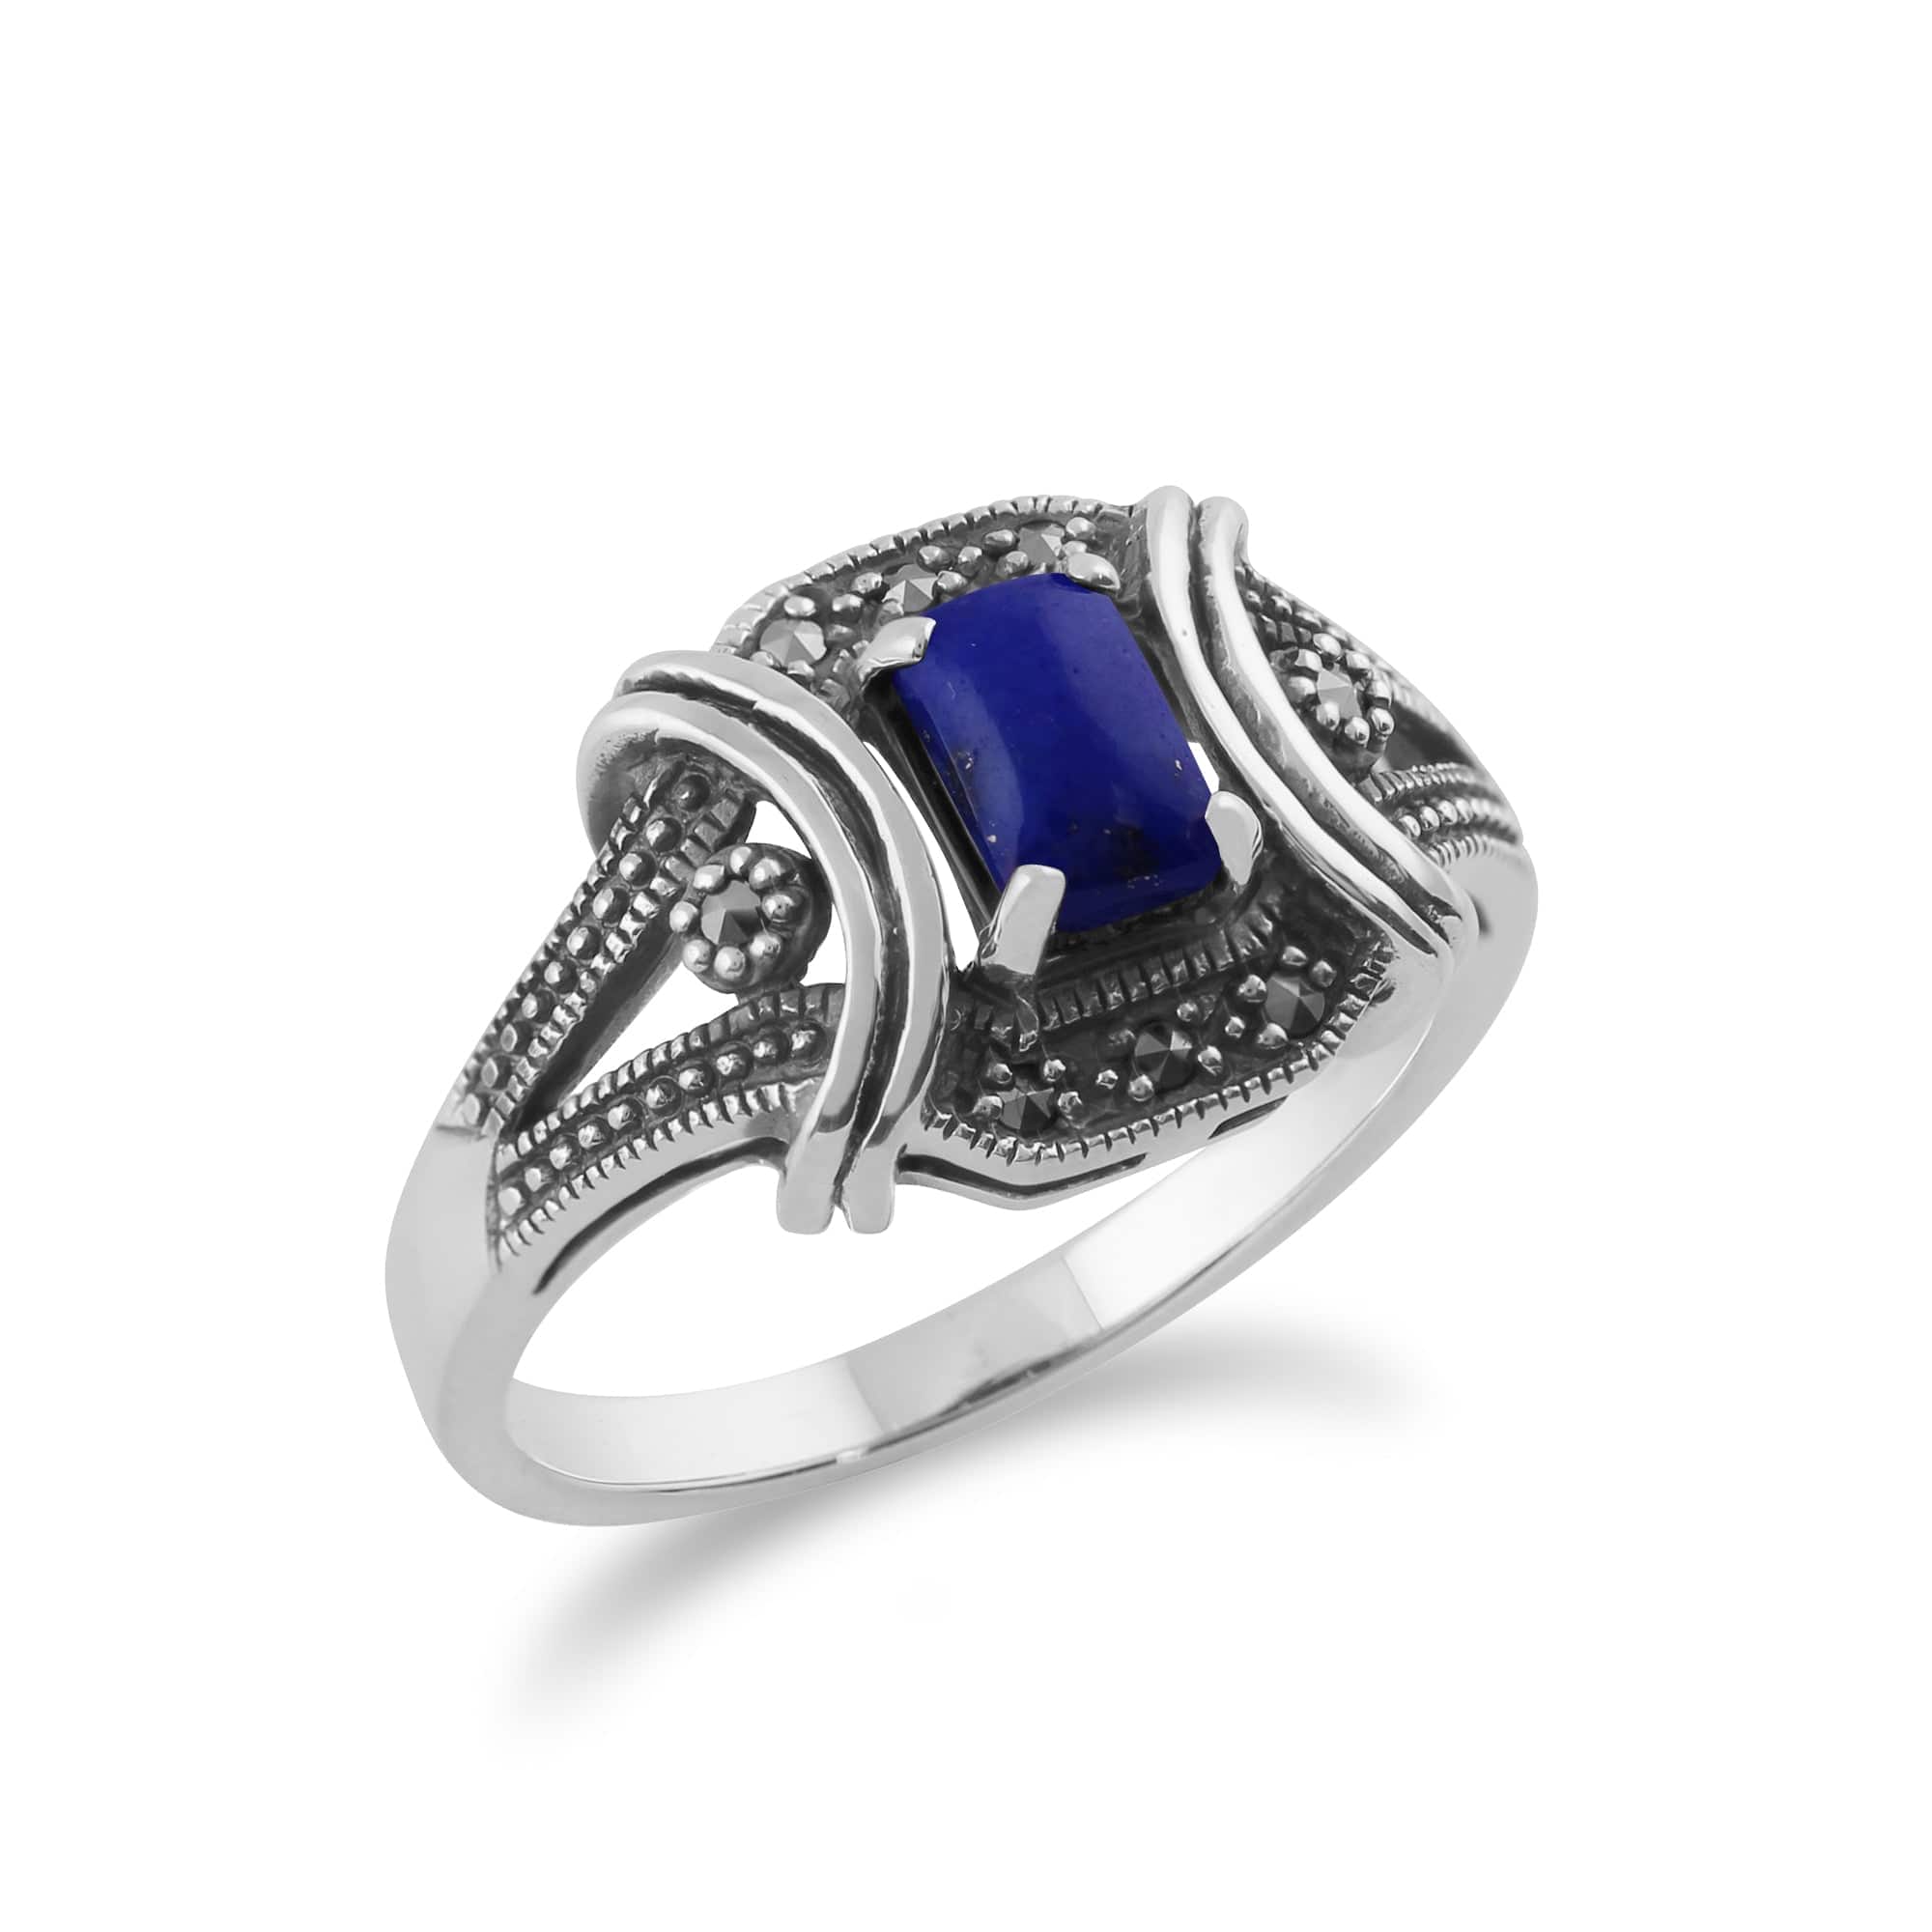 214R586802925 Gemondo 925 Sterling Silver 0.52ct Lapis Lazuli & Marcasite Art Deco Ring 2